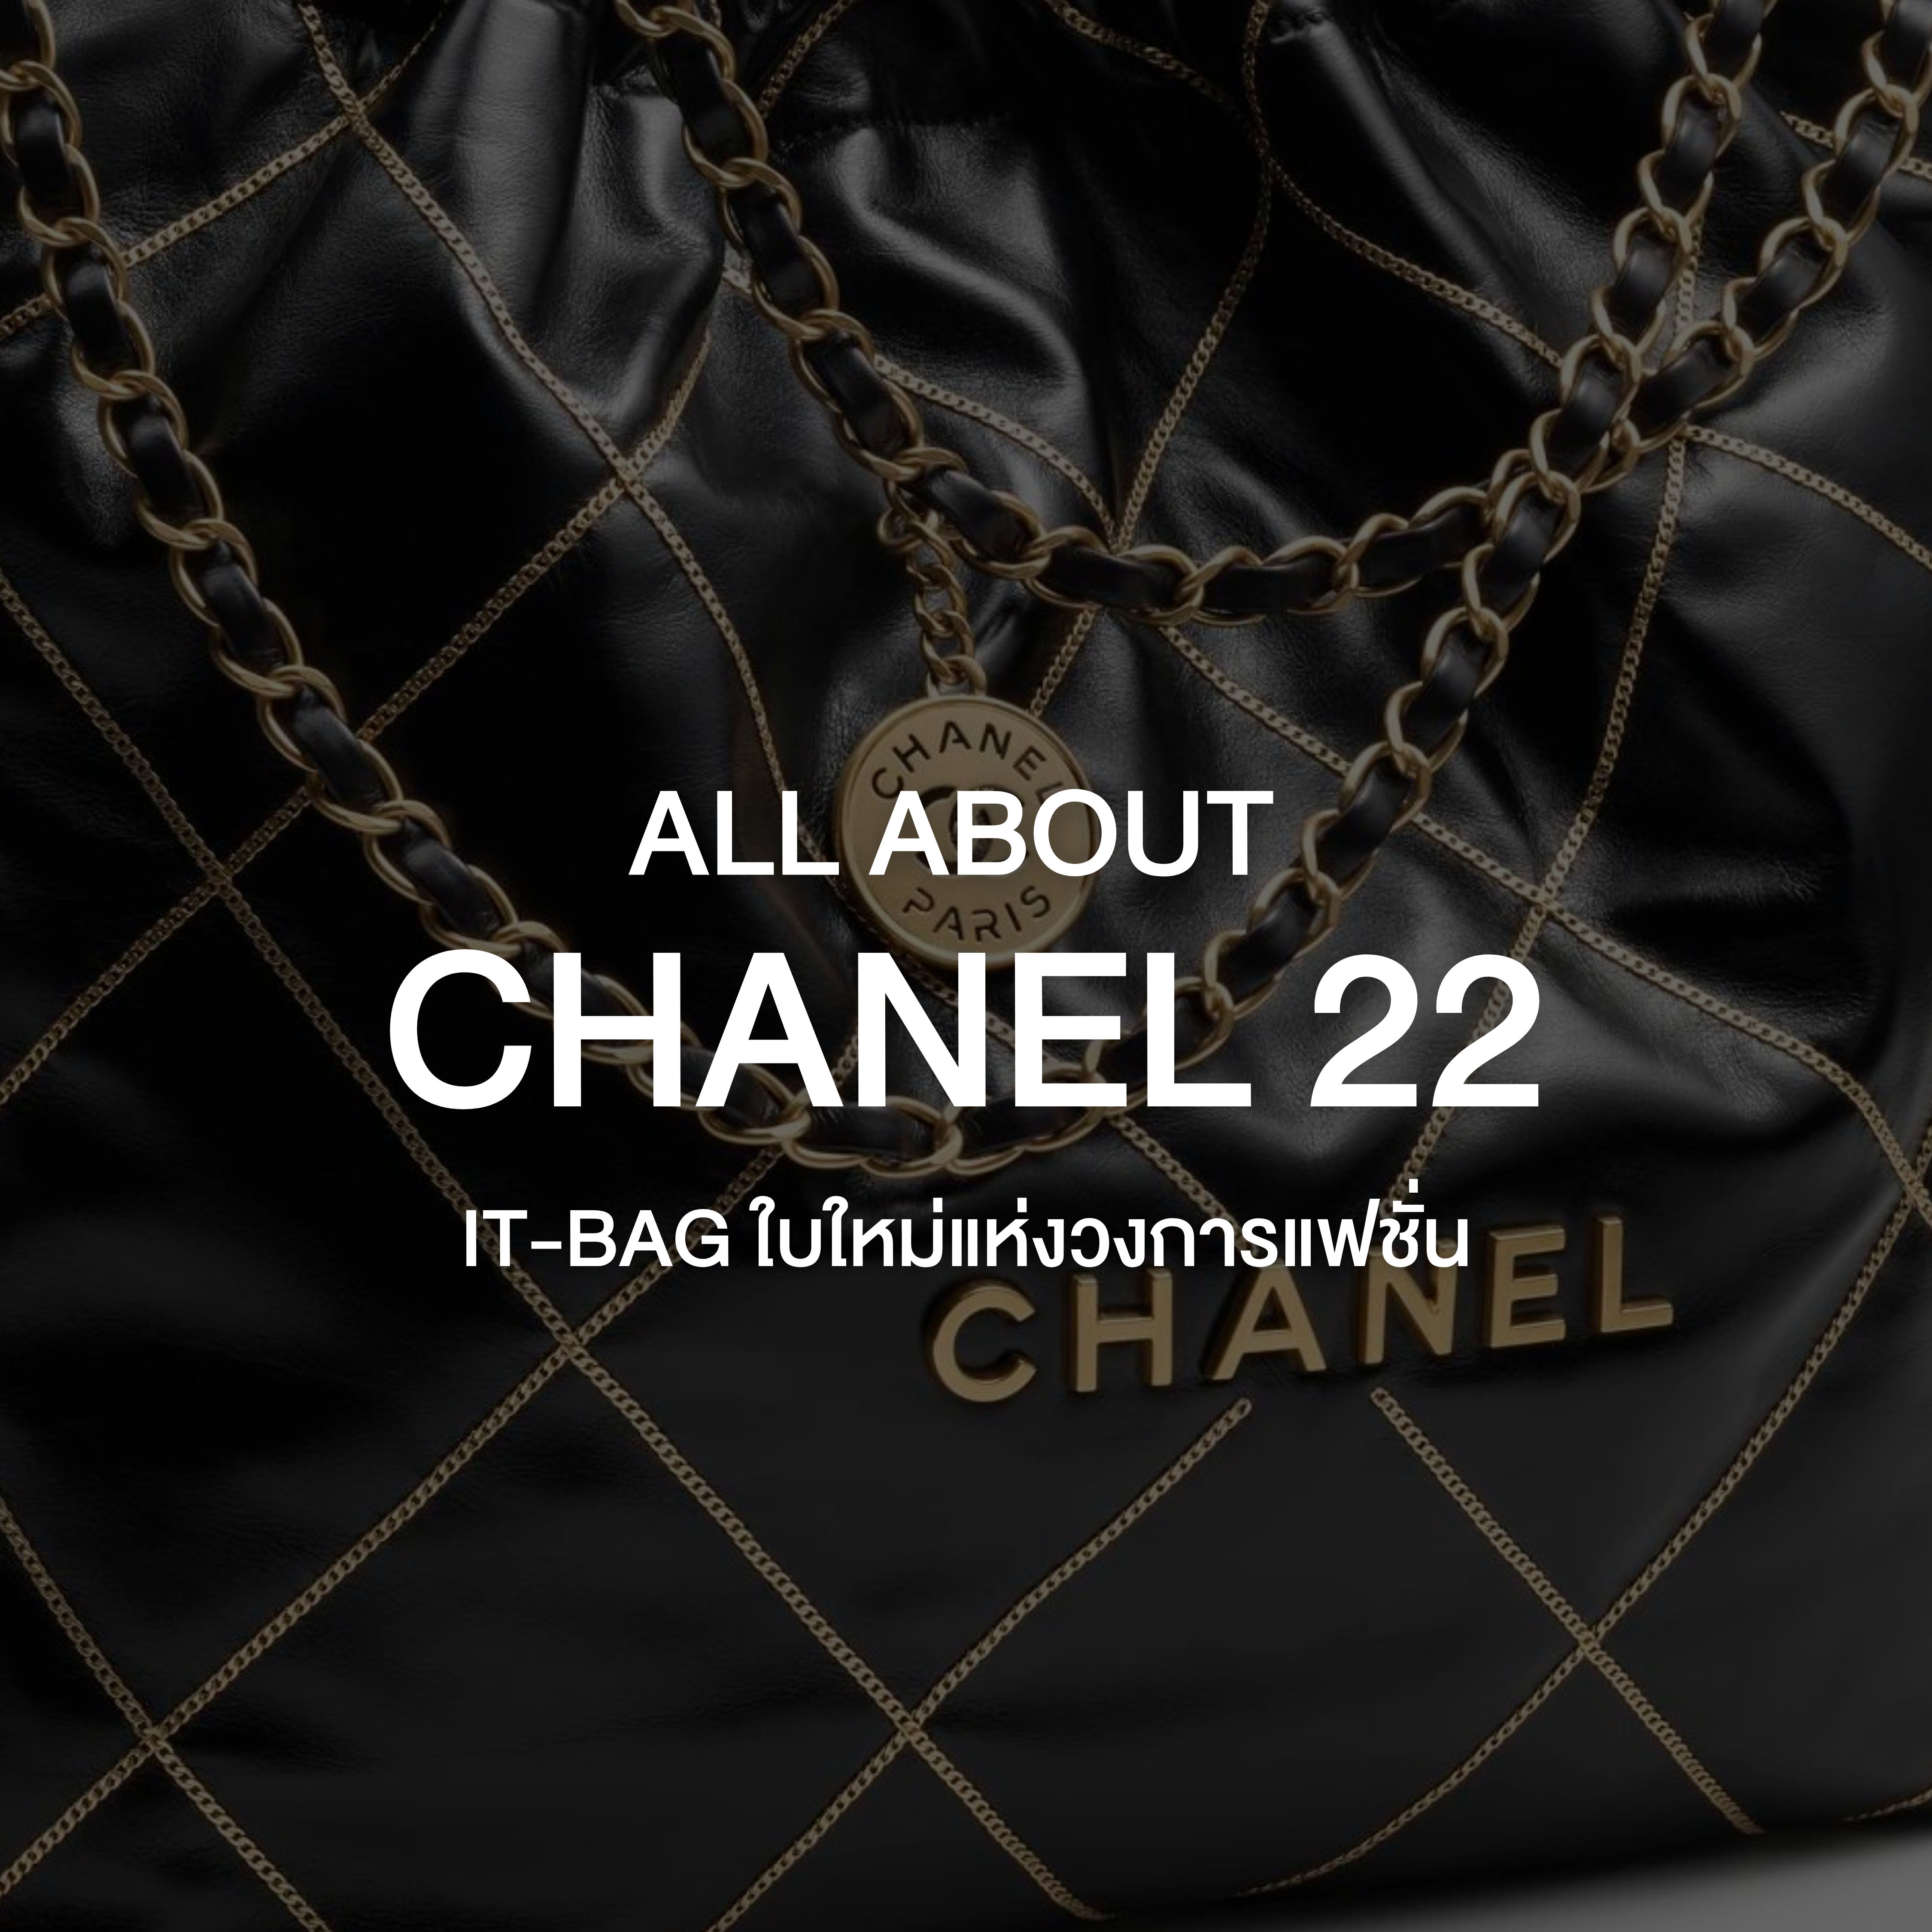 All about Chanel 22 It-Bag ใบใหม่แห่งวงการแฟชั่น